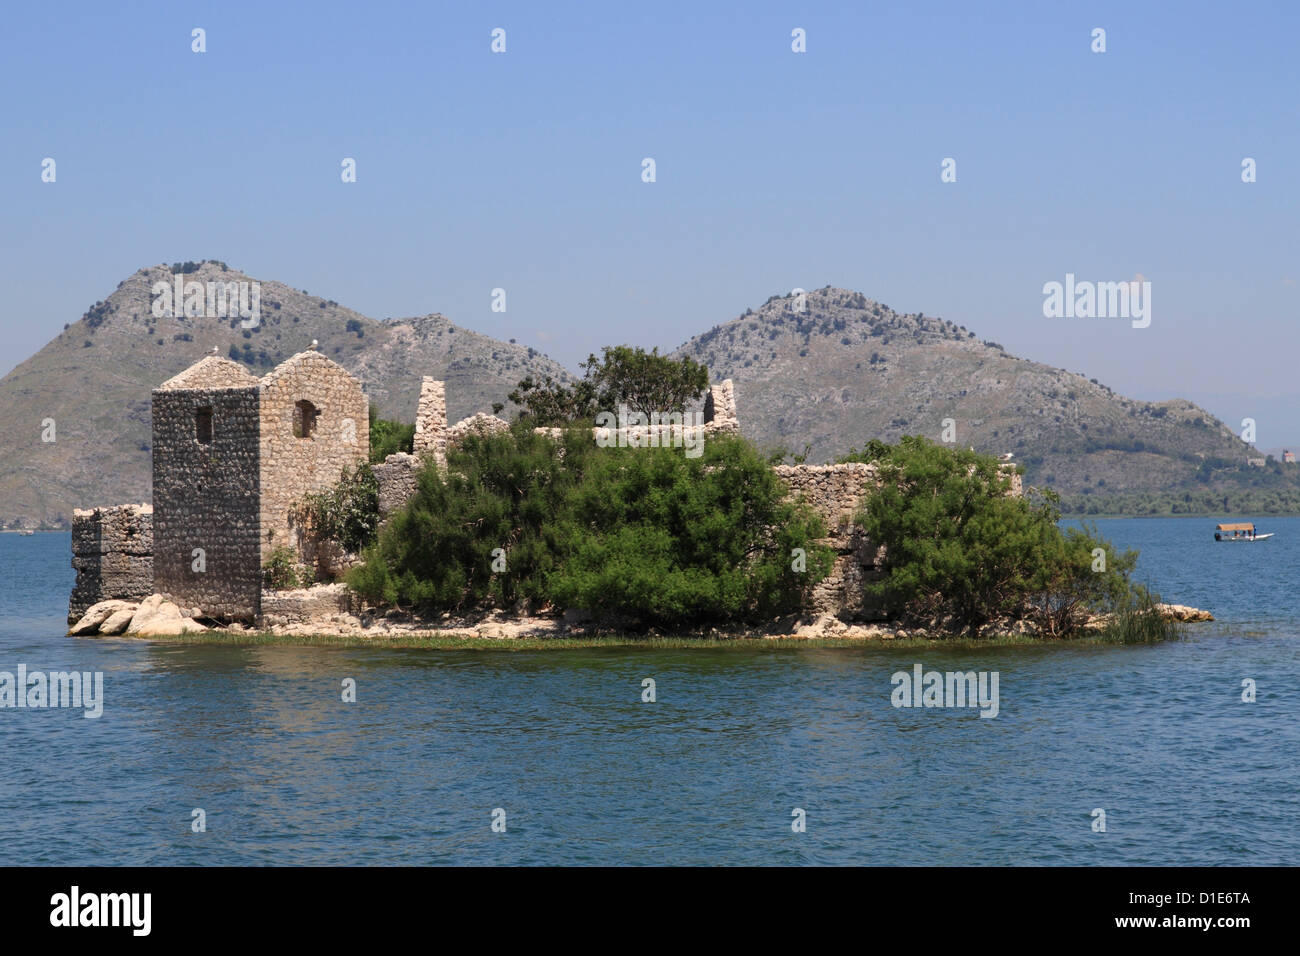 St. Nikola monastery and island, Skadar Lake, Montenegro, Europe Stock Photo